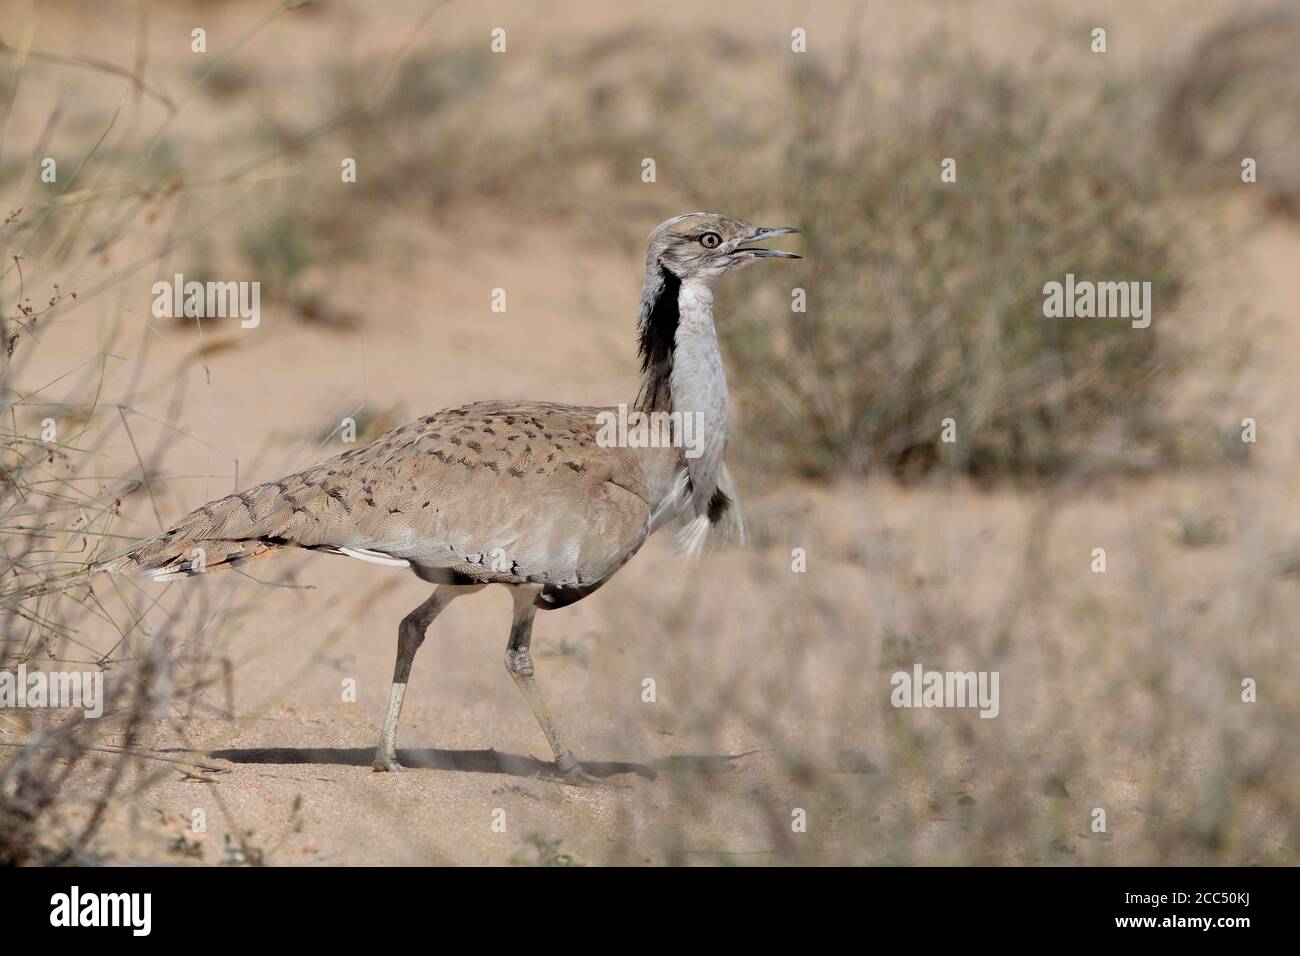 Macqueen's Bustard (Chlamydotis macqueenii), walking through desert, United Arab Emirates Stock Photo